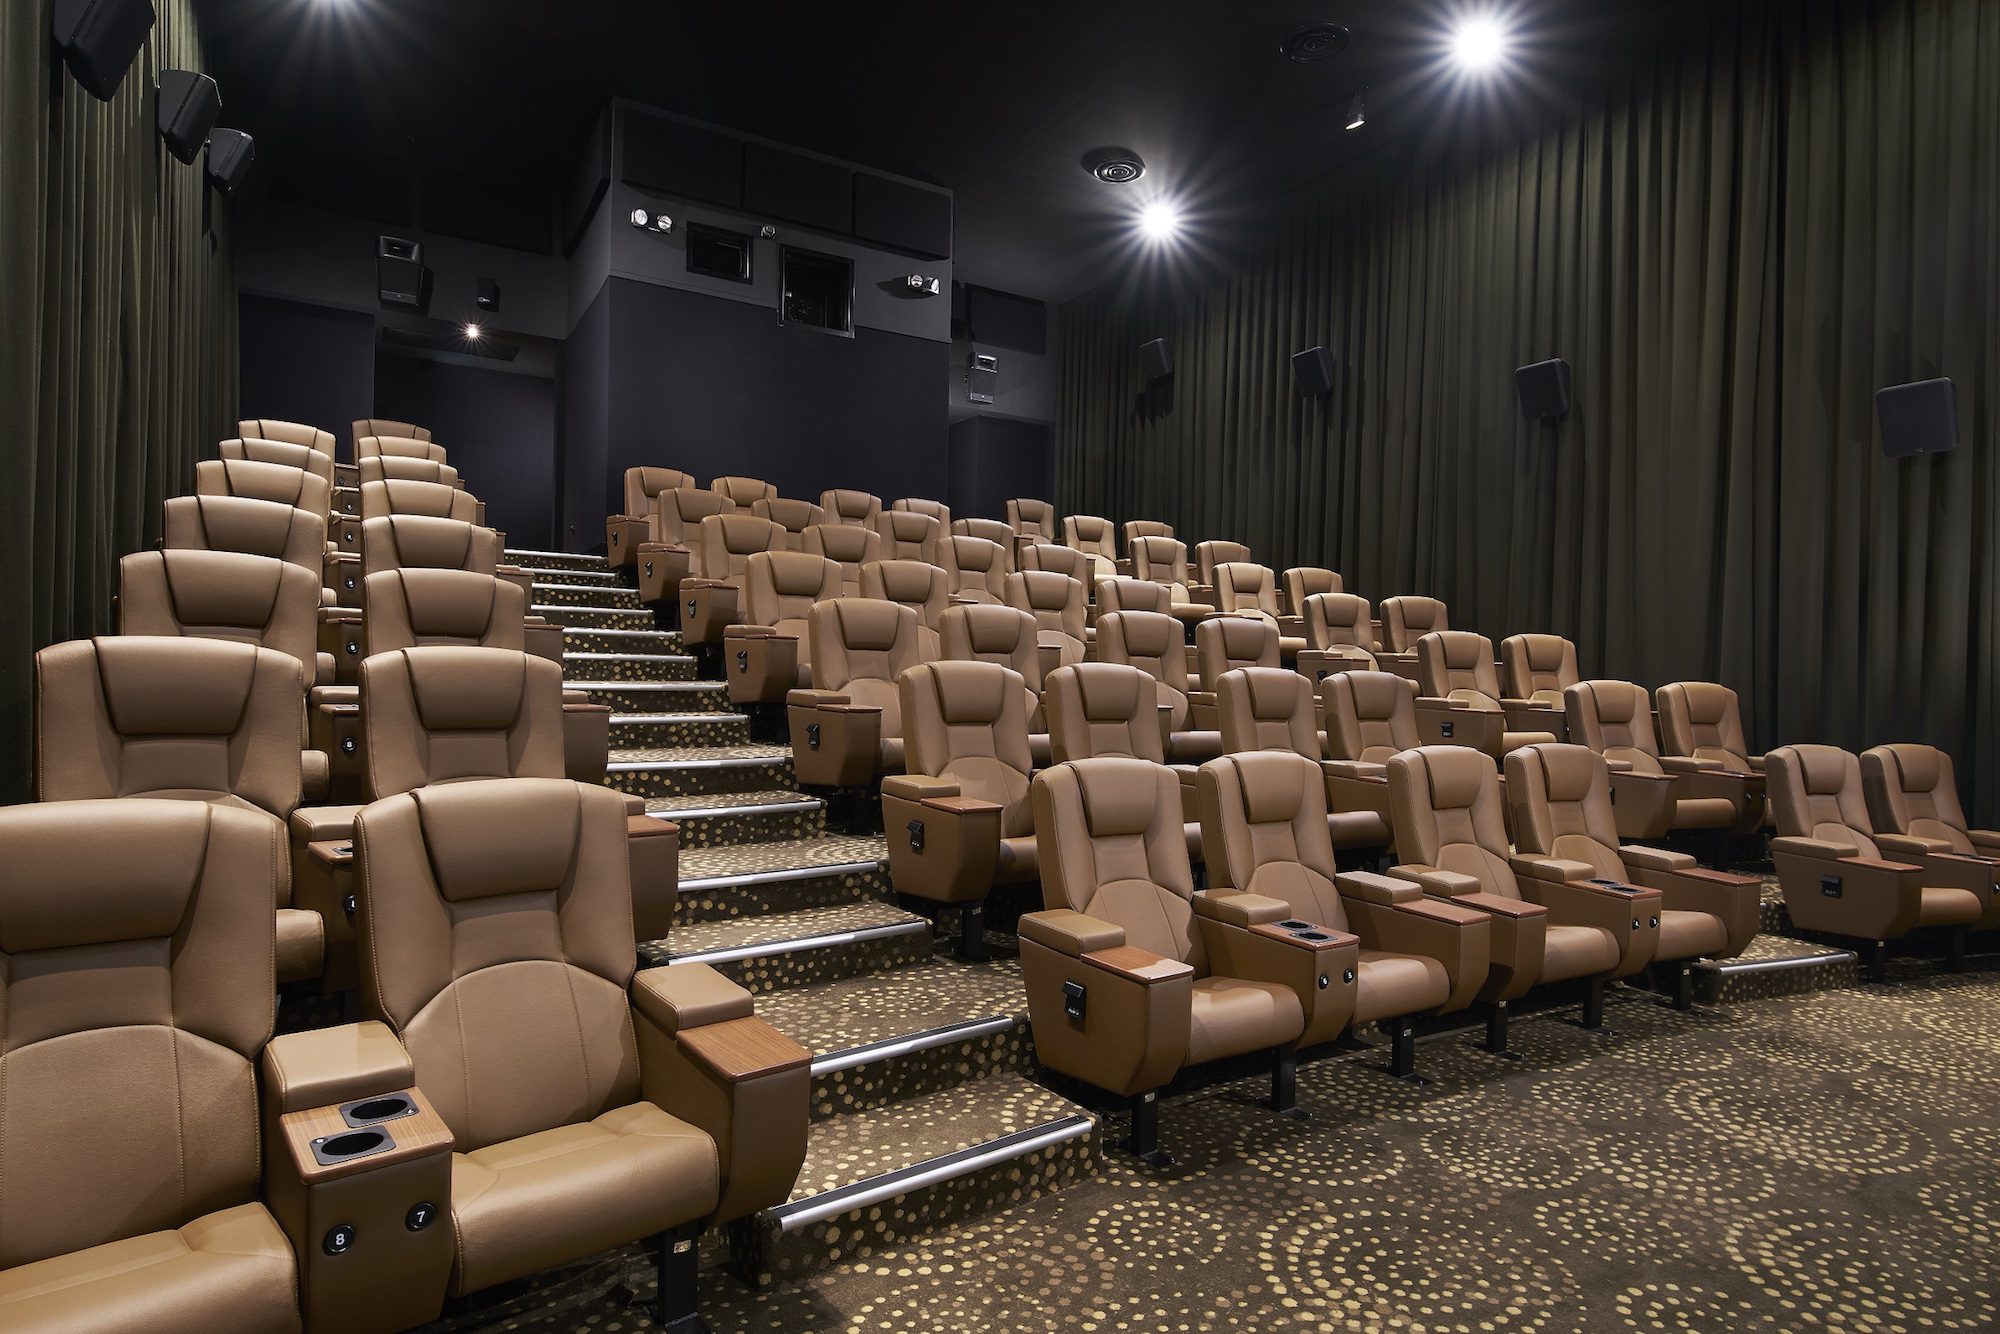 [Movies] New Golden Village cineplex at SingPost Centre debuts laser